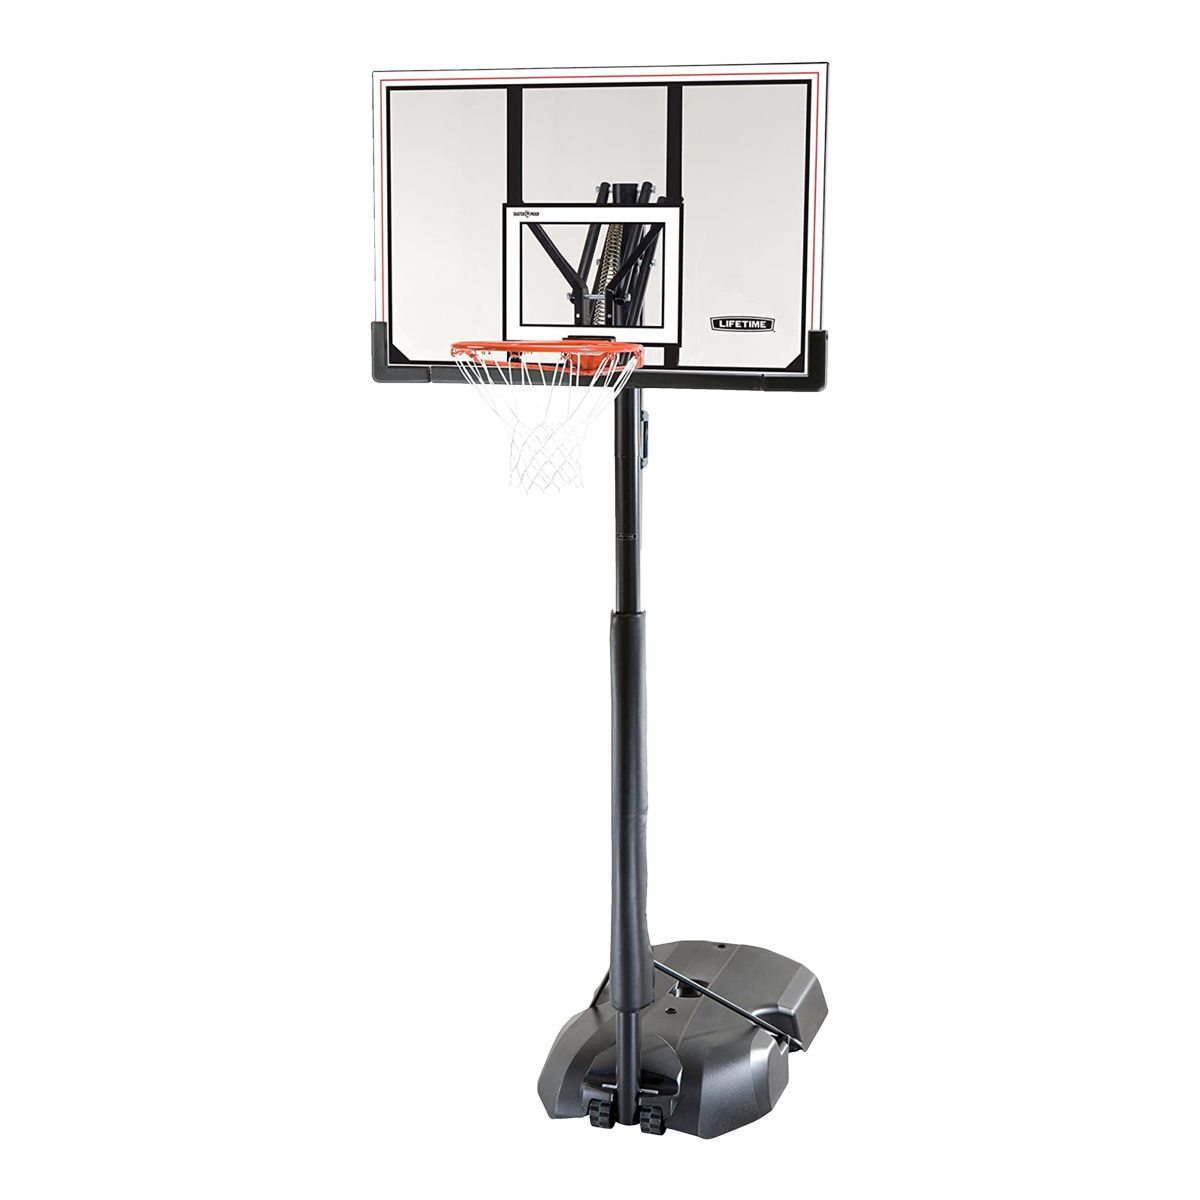 Image of Lifetime Port 50 Inch Polycarbonate Basketball Net